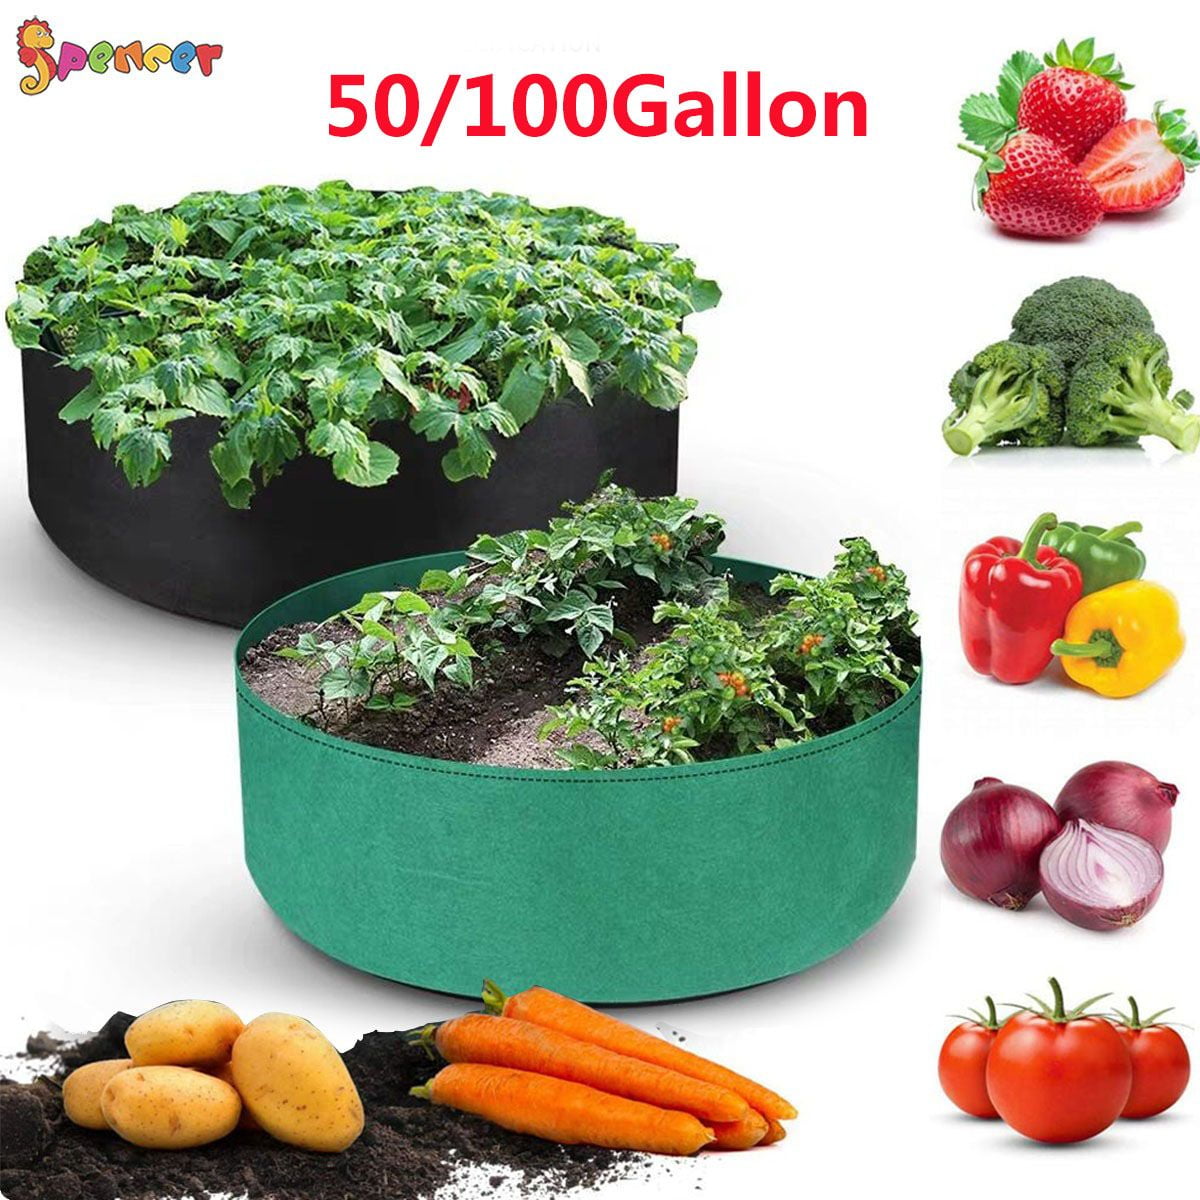 Details about   Rectangle Large Grow Bag Planter Garden Vegetable Tomato Potato Carrot Plant Pot 